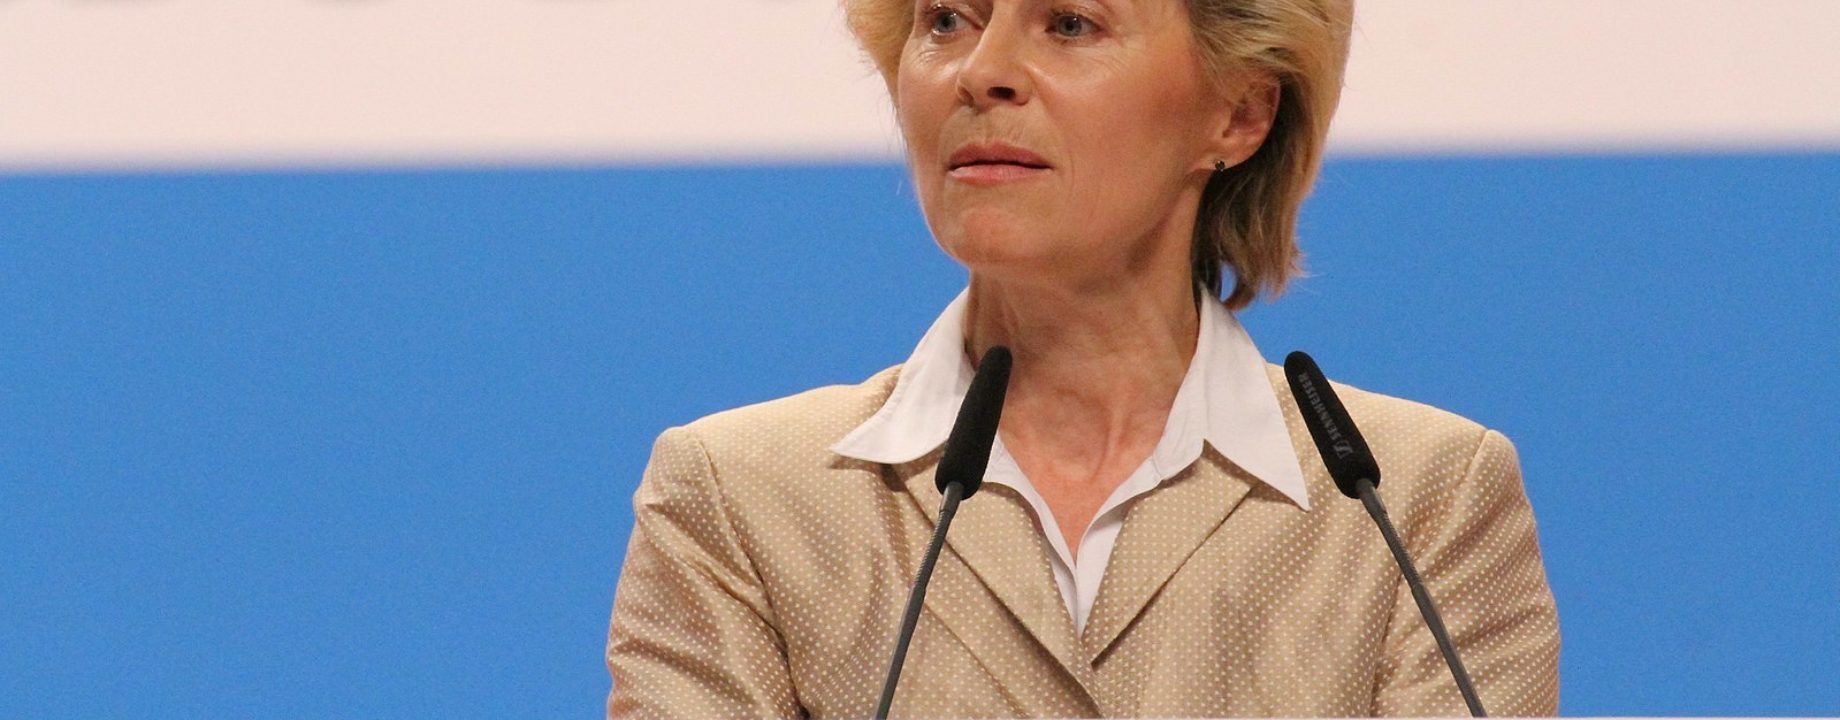 1599px Ursula von der Leyen CDU Parteitag 2014 by Olaf Kosinsky 9